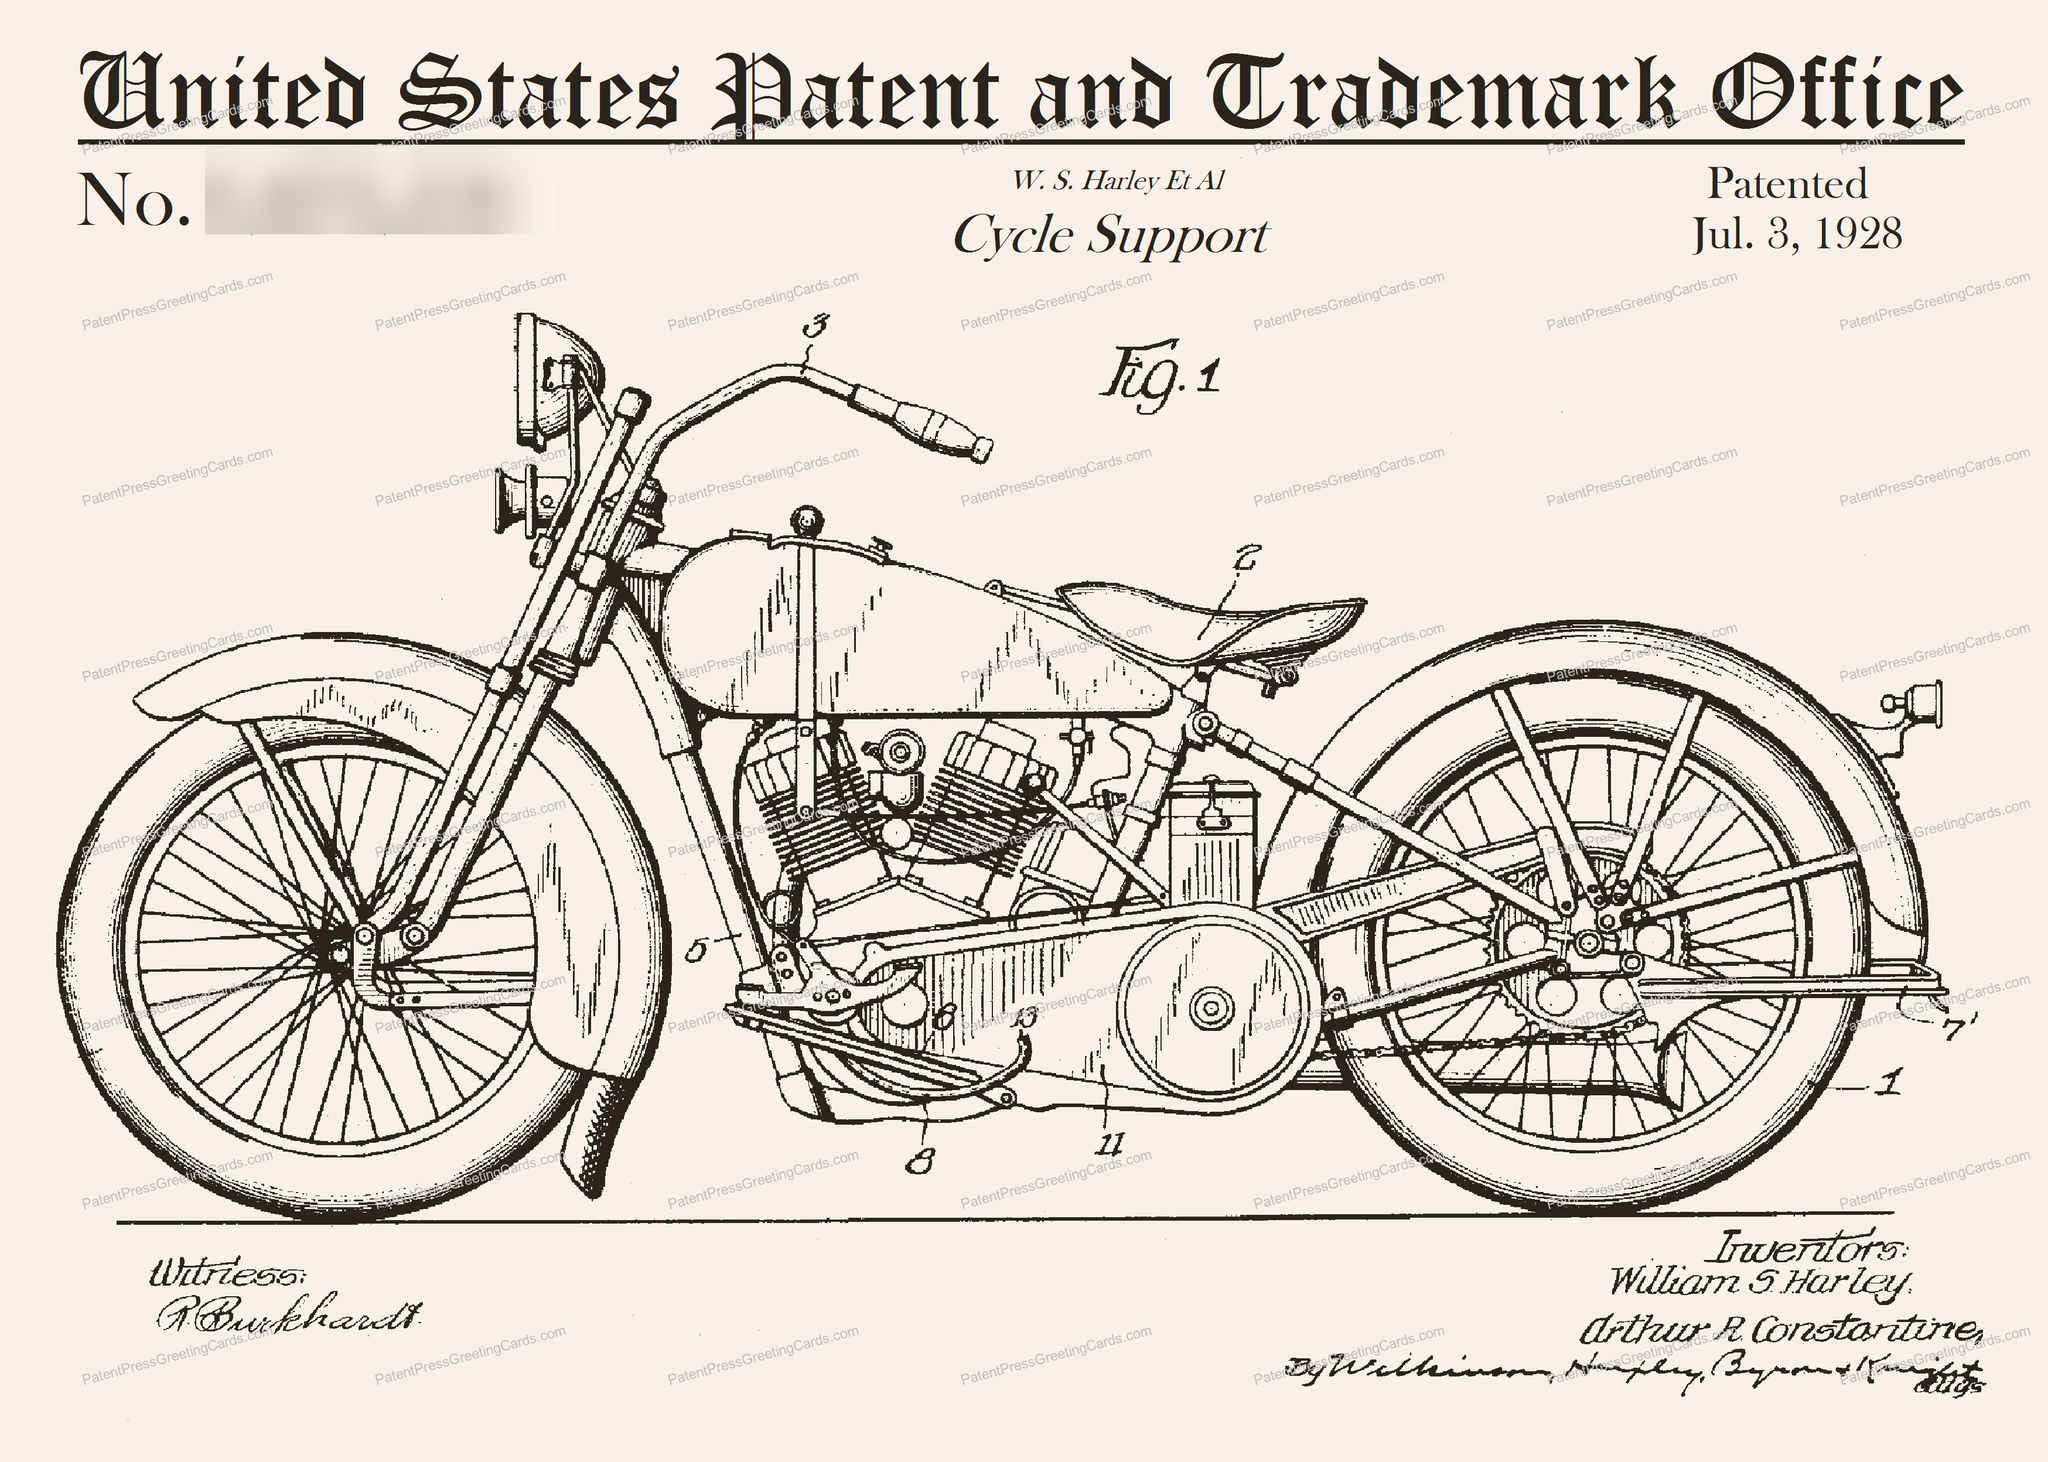 CARD-069: Harley (1928) - Patent Press™